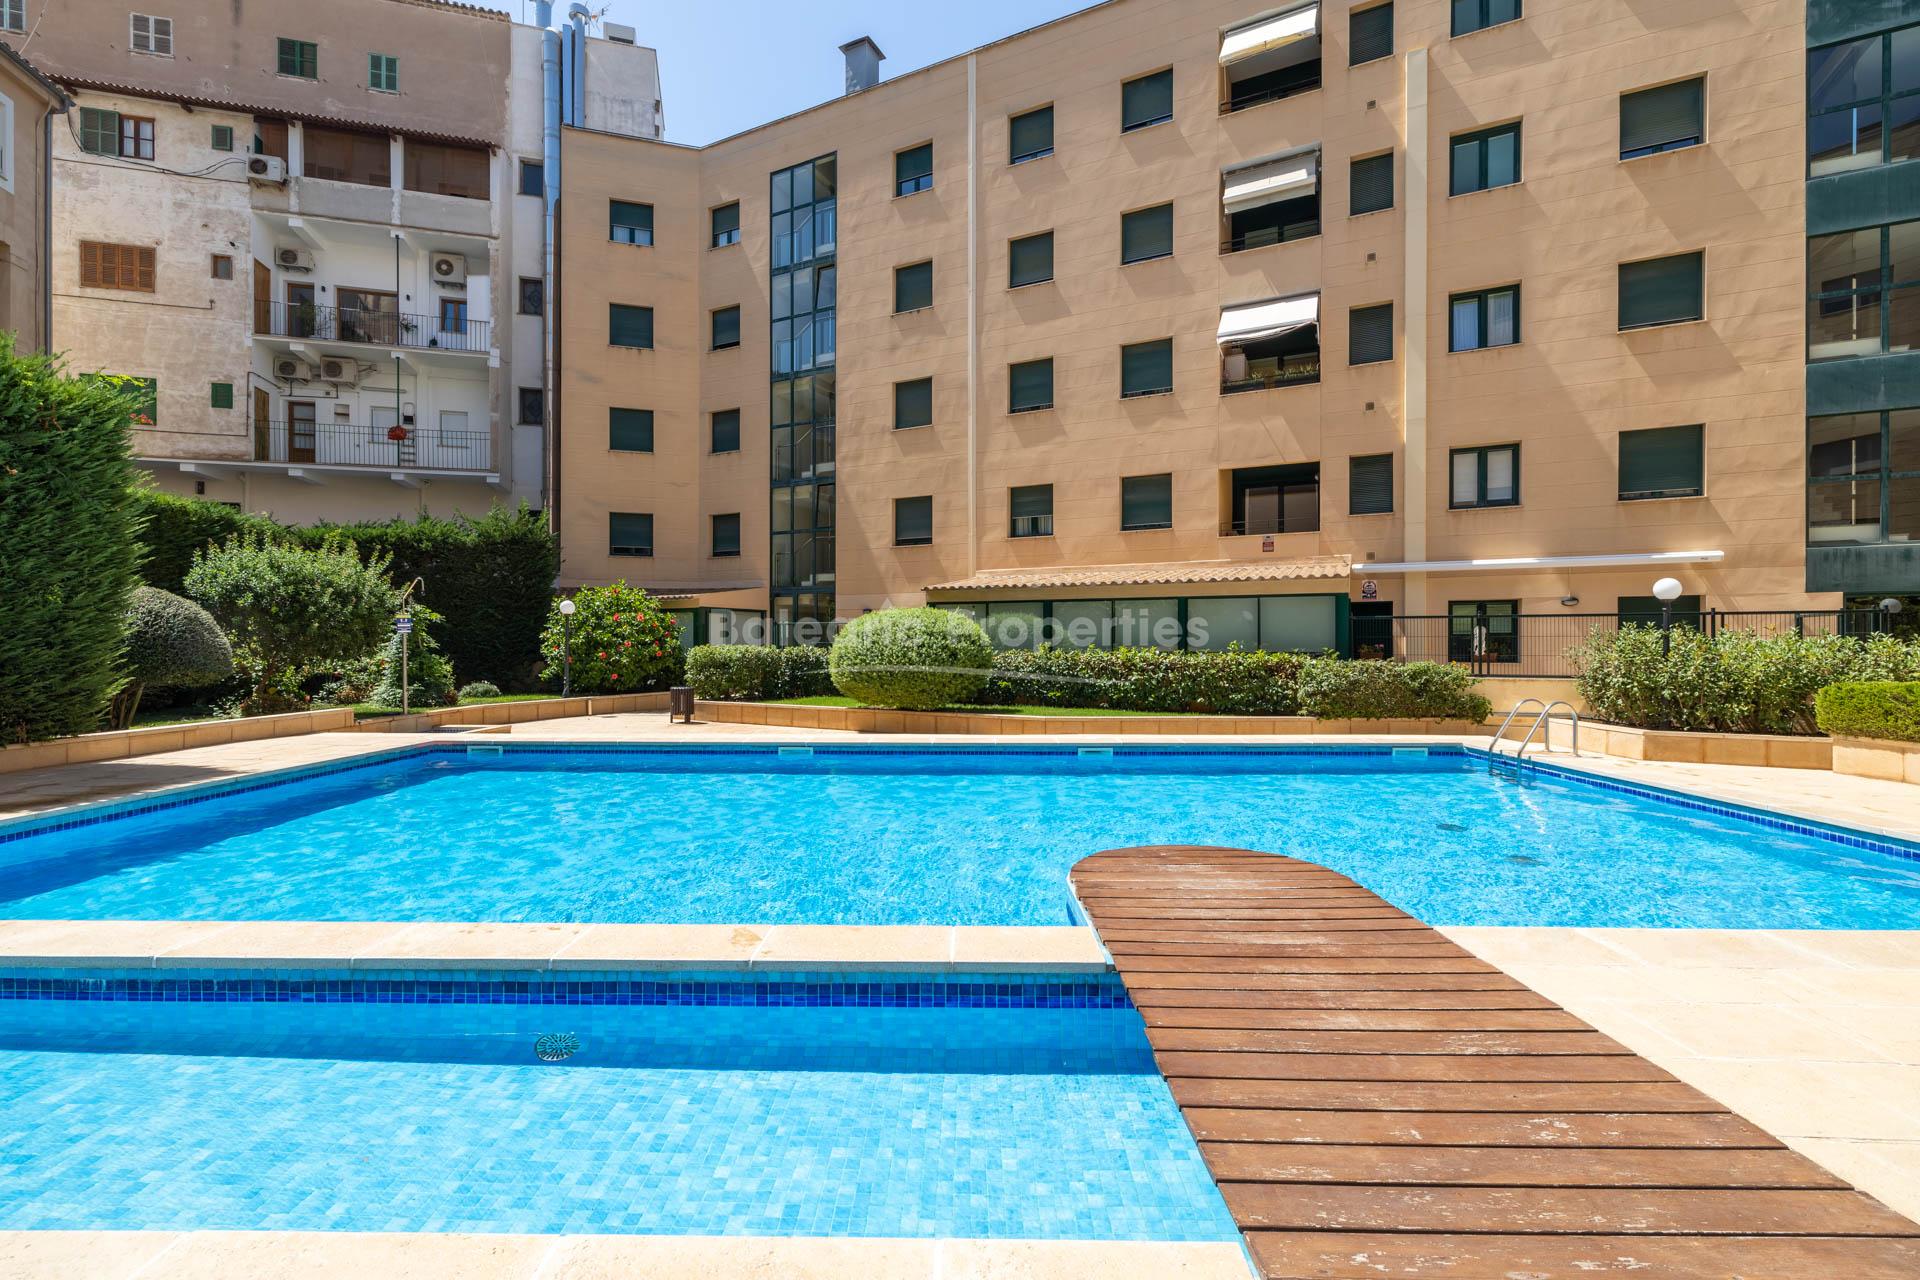 Elegante apartamento con piscina comunitaria en venta en el Casco Antiguo de Palma, Mallorca